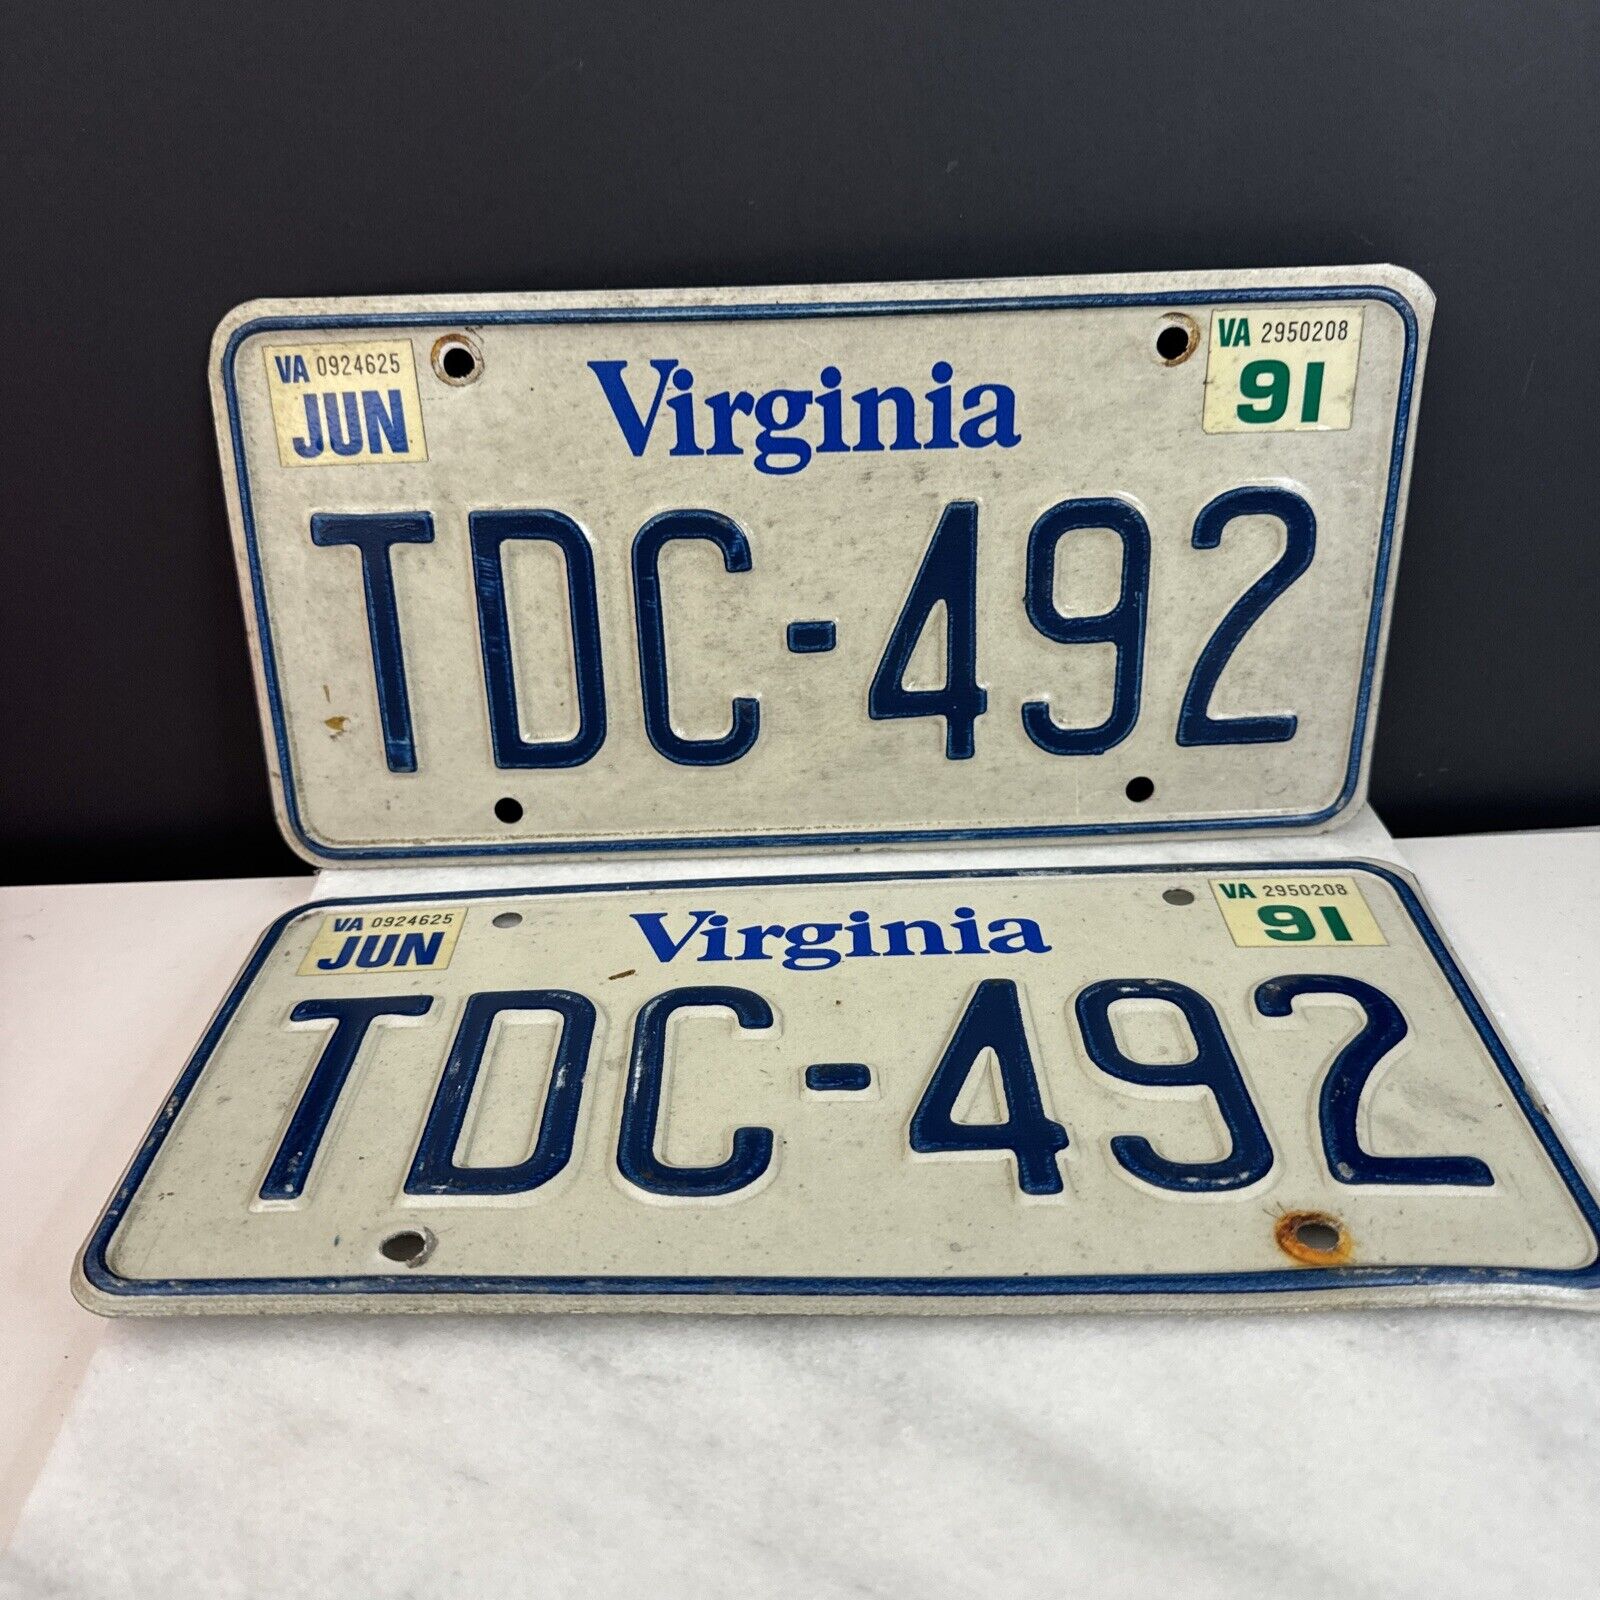 Virginia TDC – 492 1991 Vintage License plate